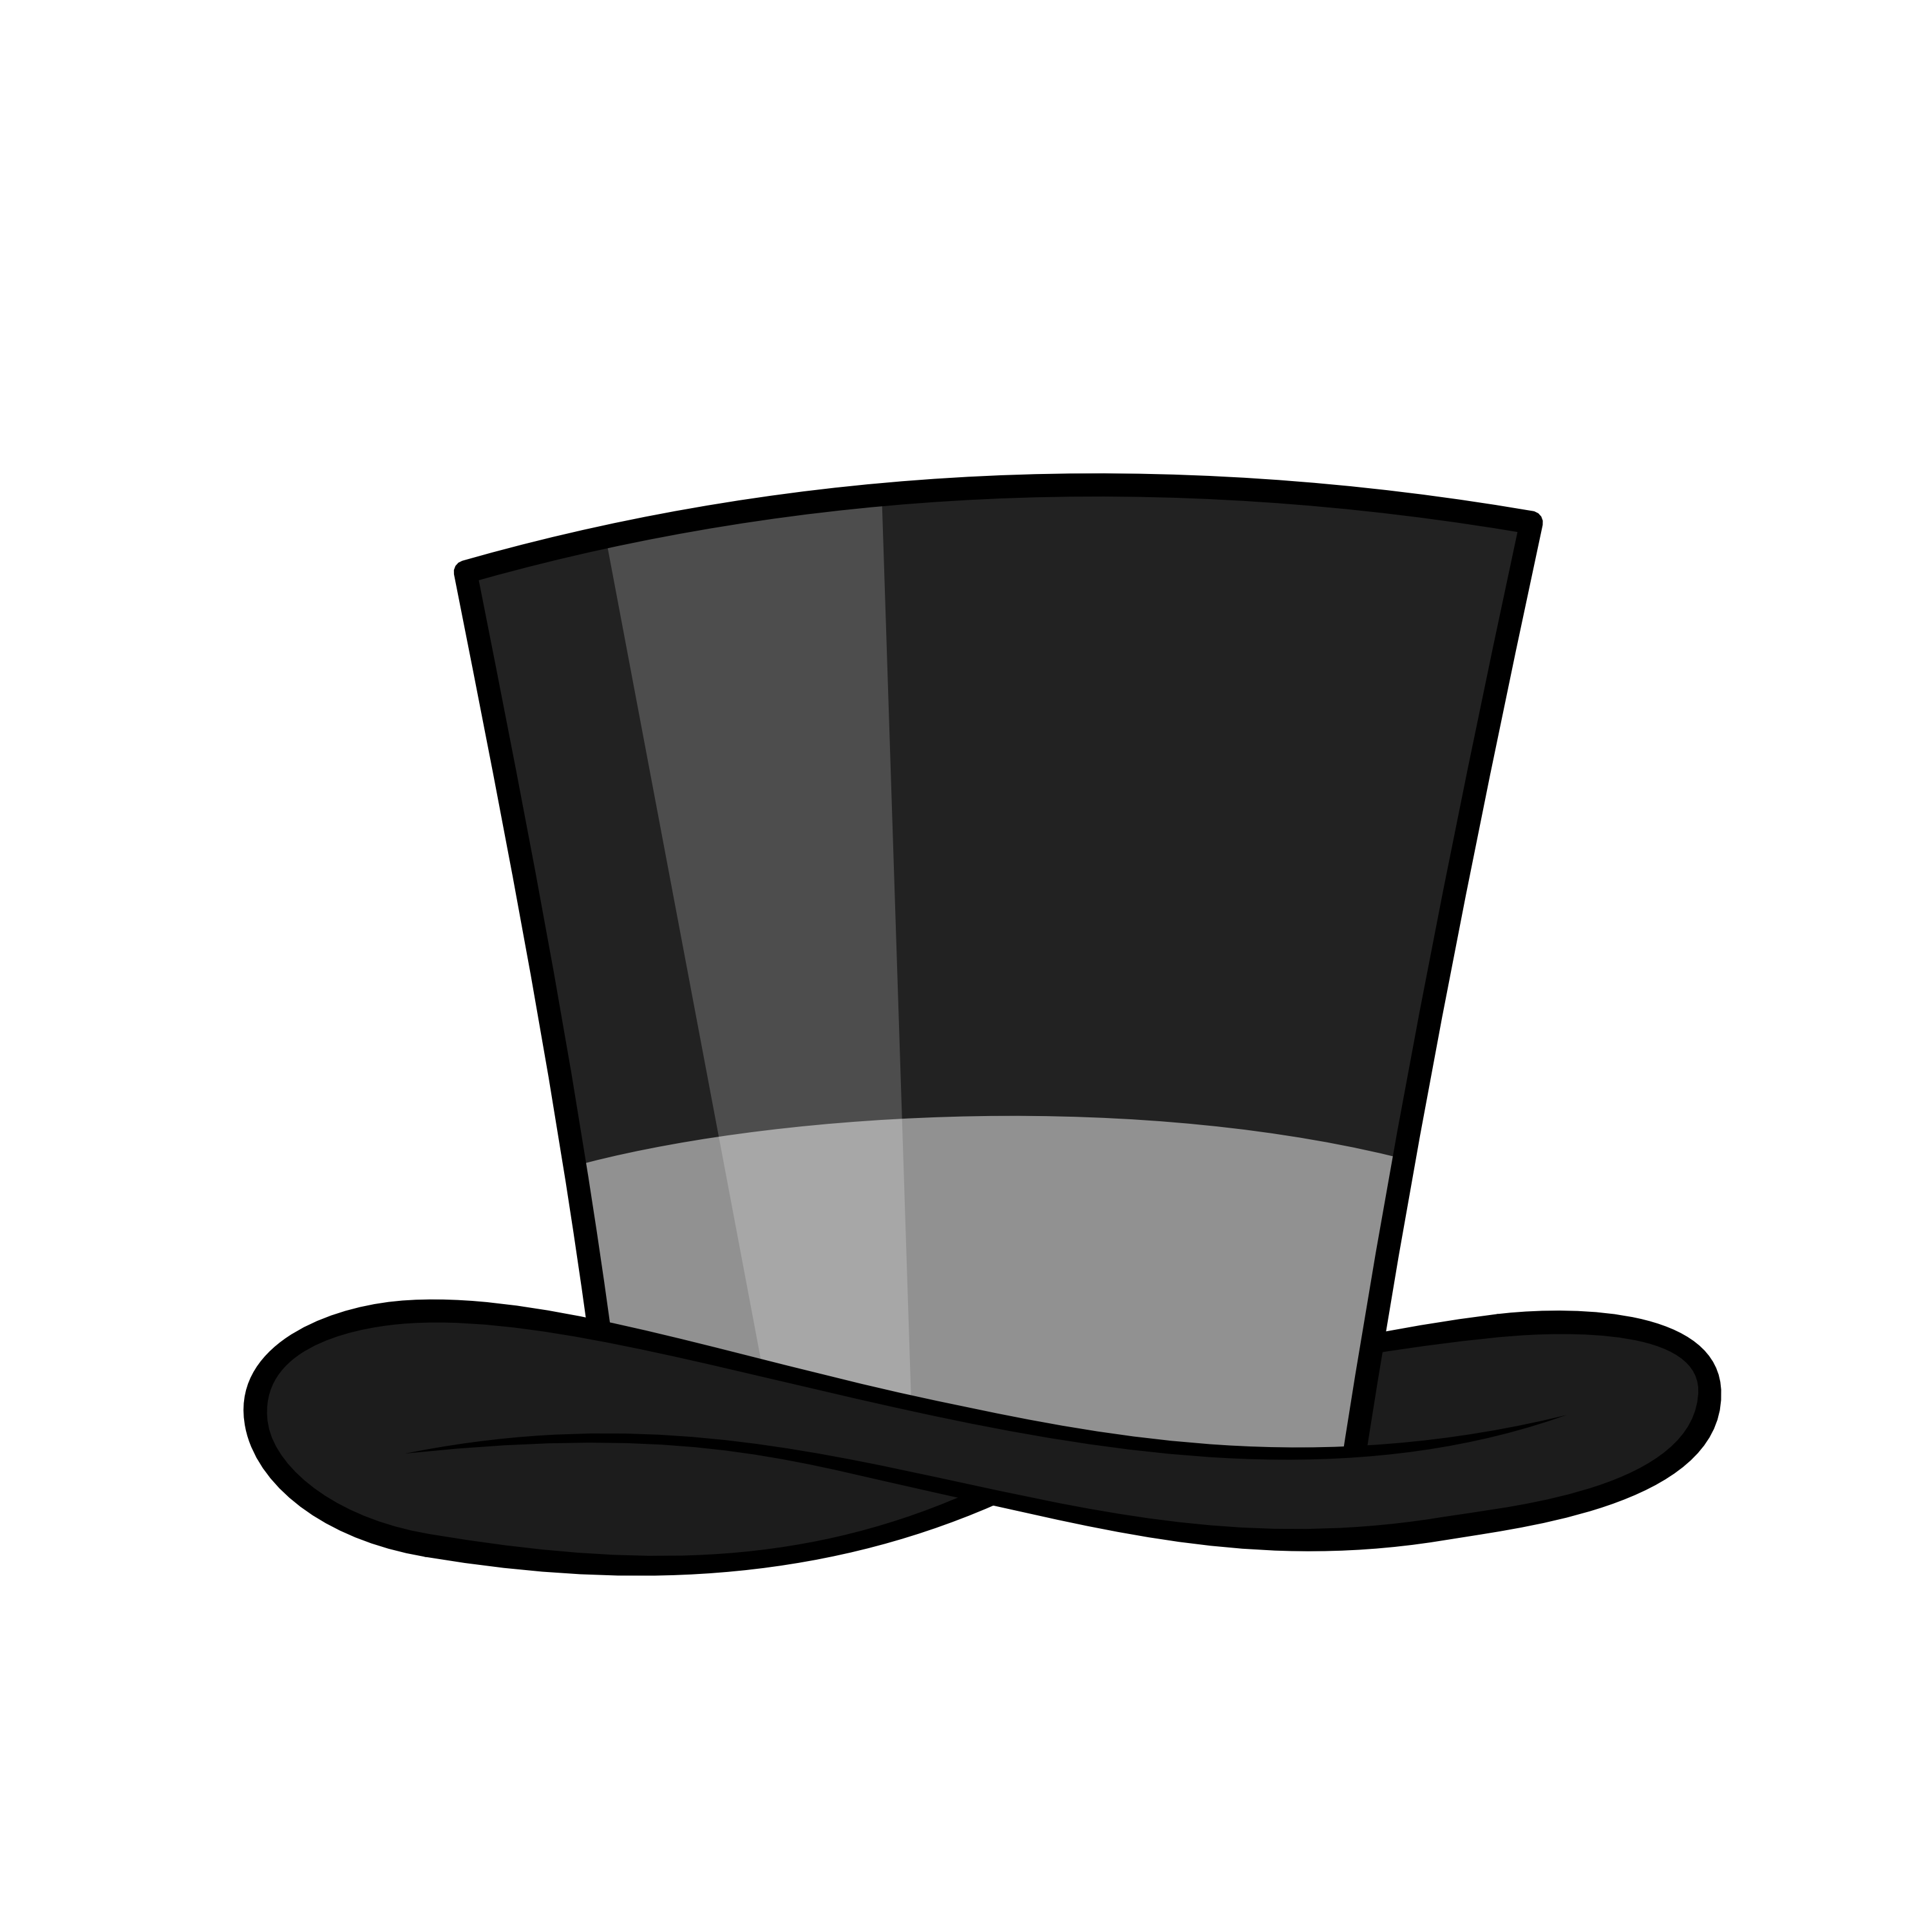 magician top hat clipart - photo #39